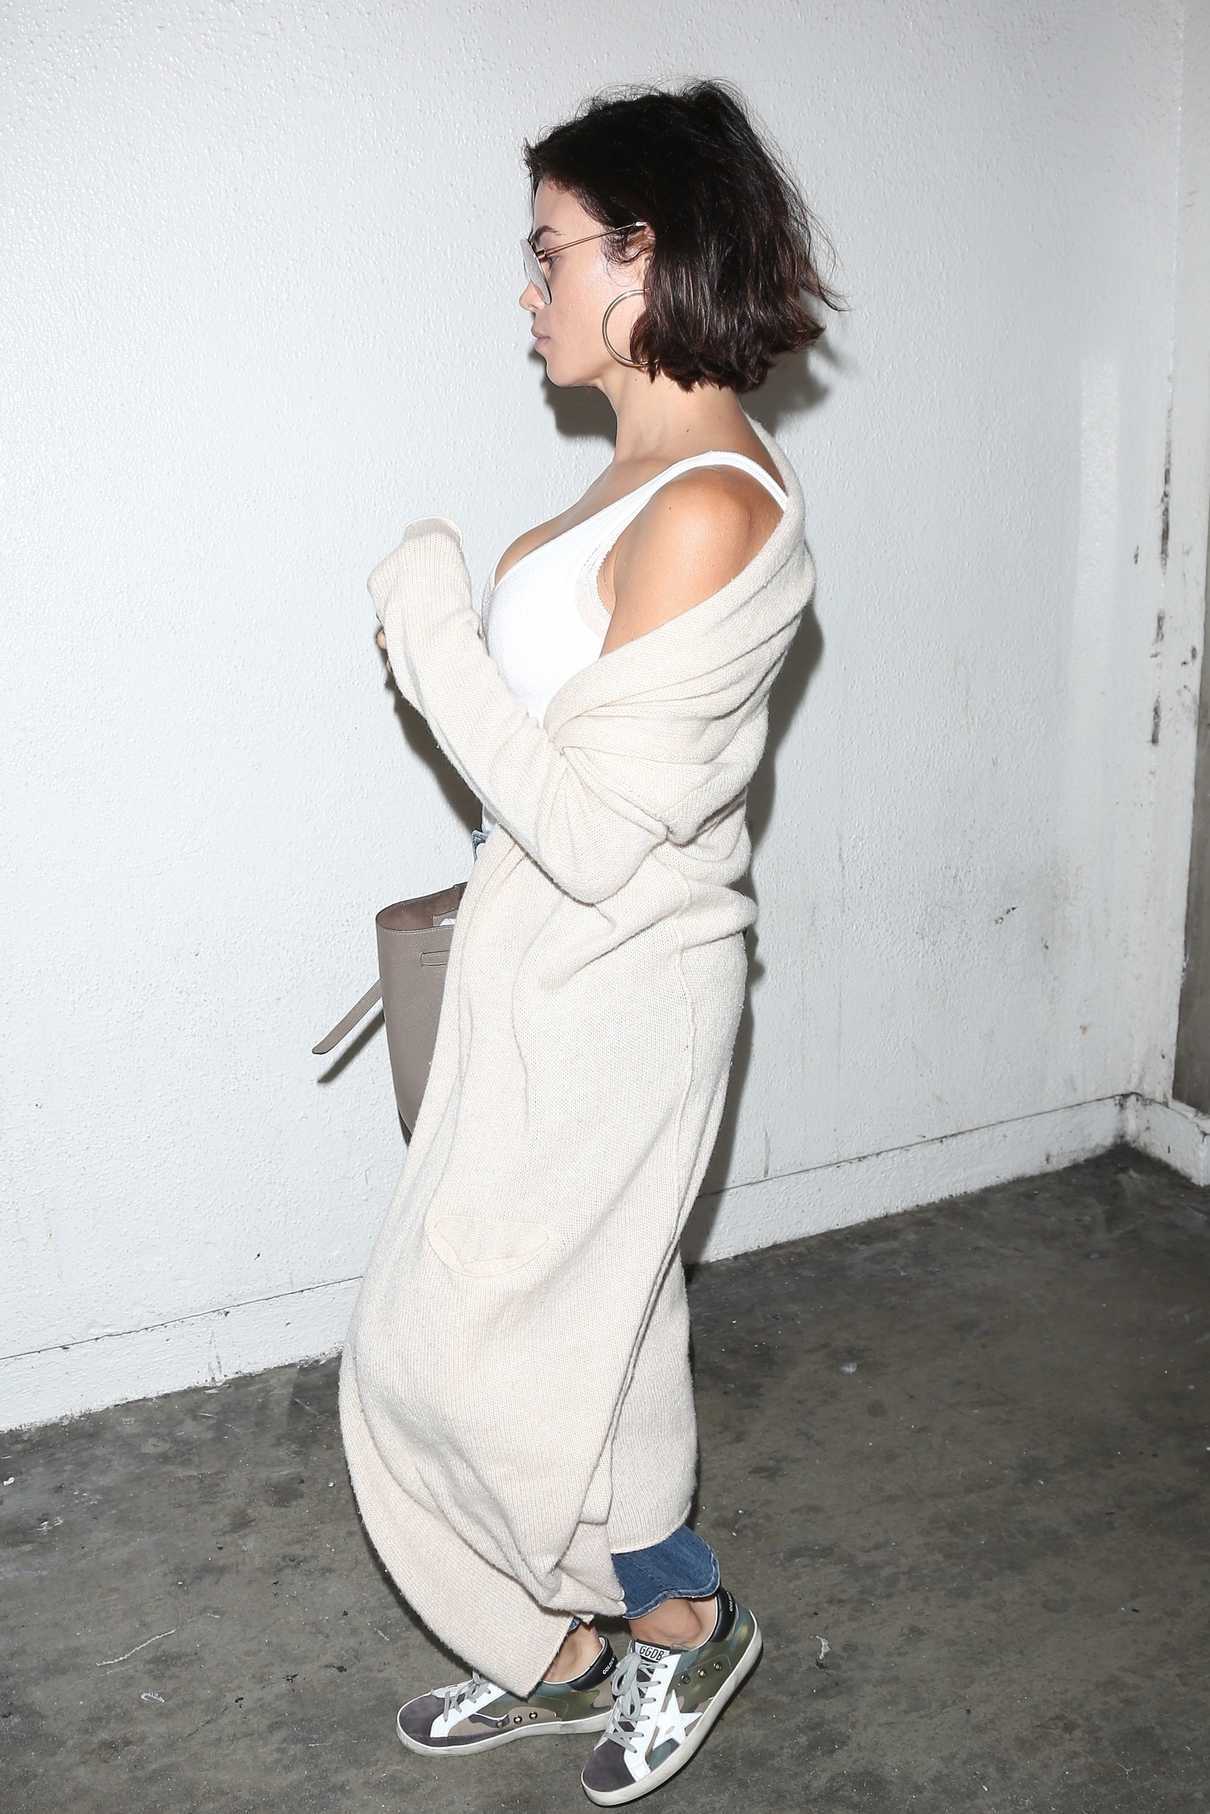 Jenna Dewan in a White Cardigan